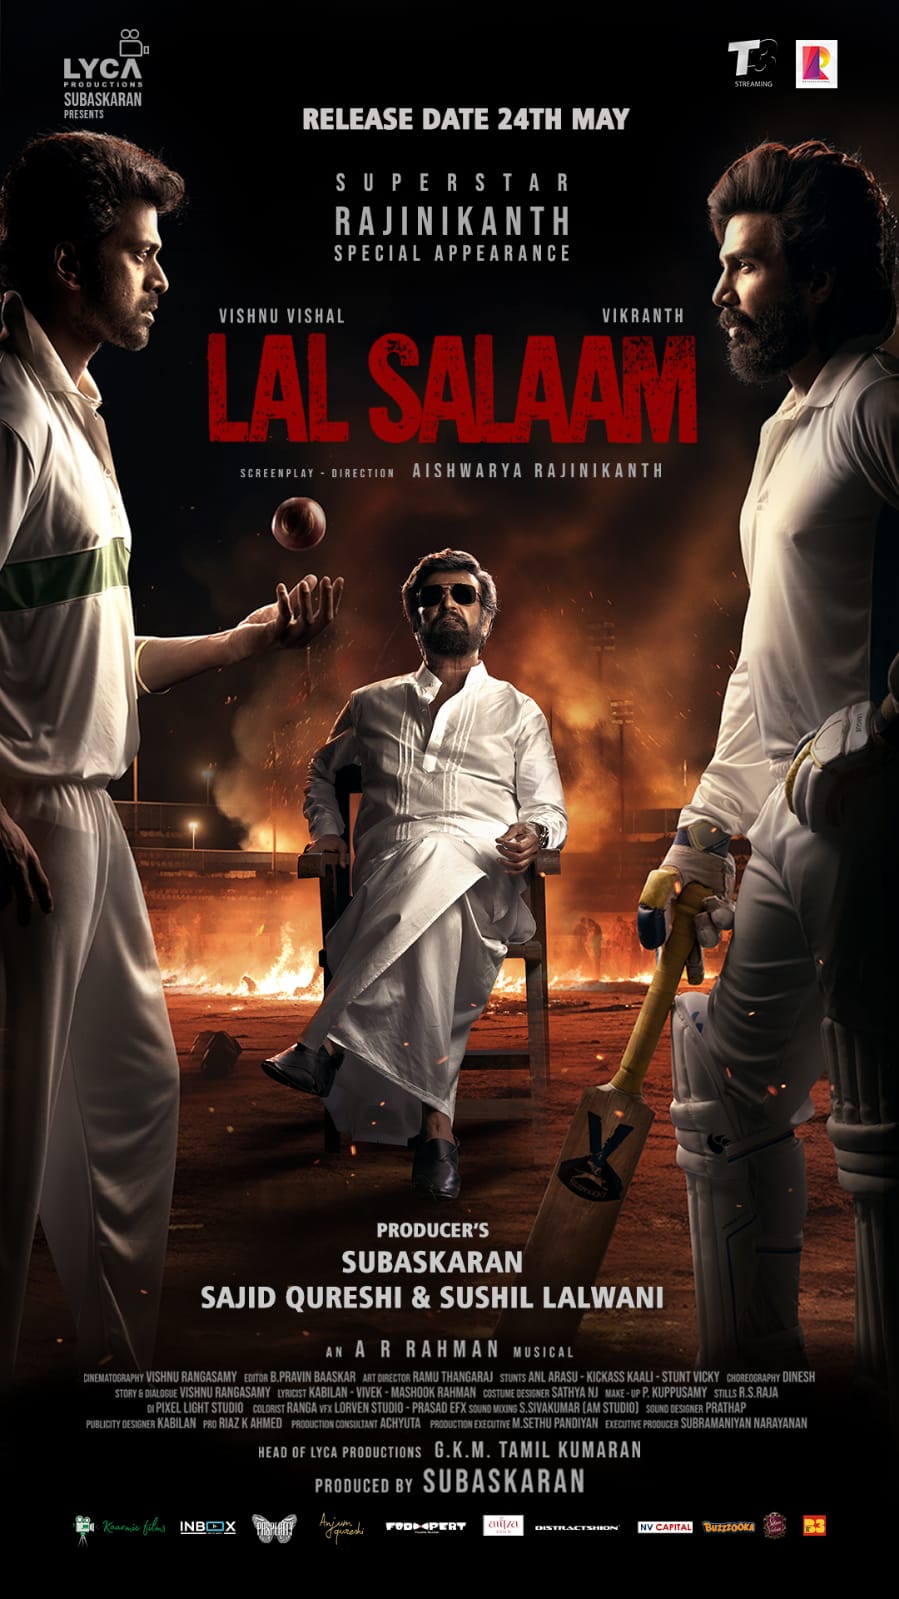 Rajinikanths Lal Salaam will be released in Hindi